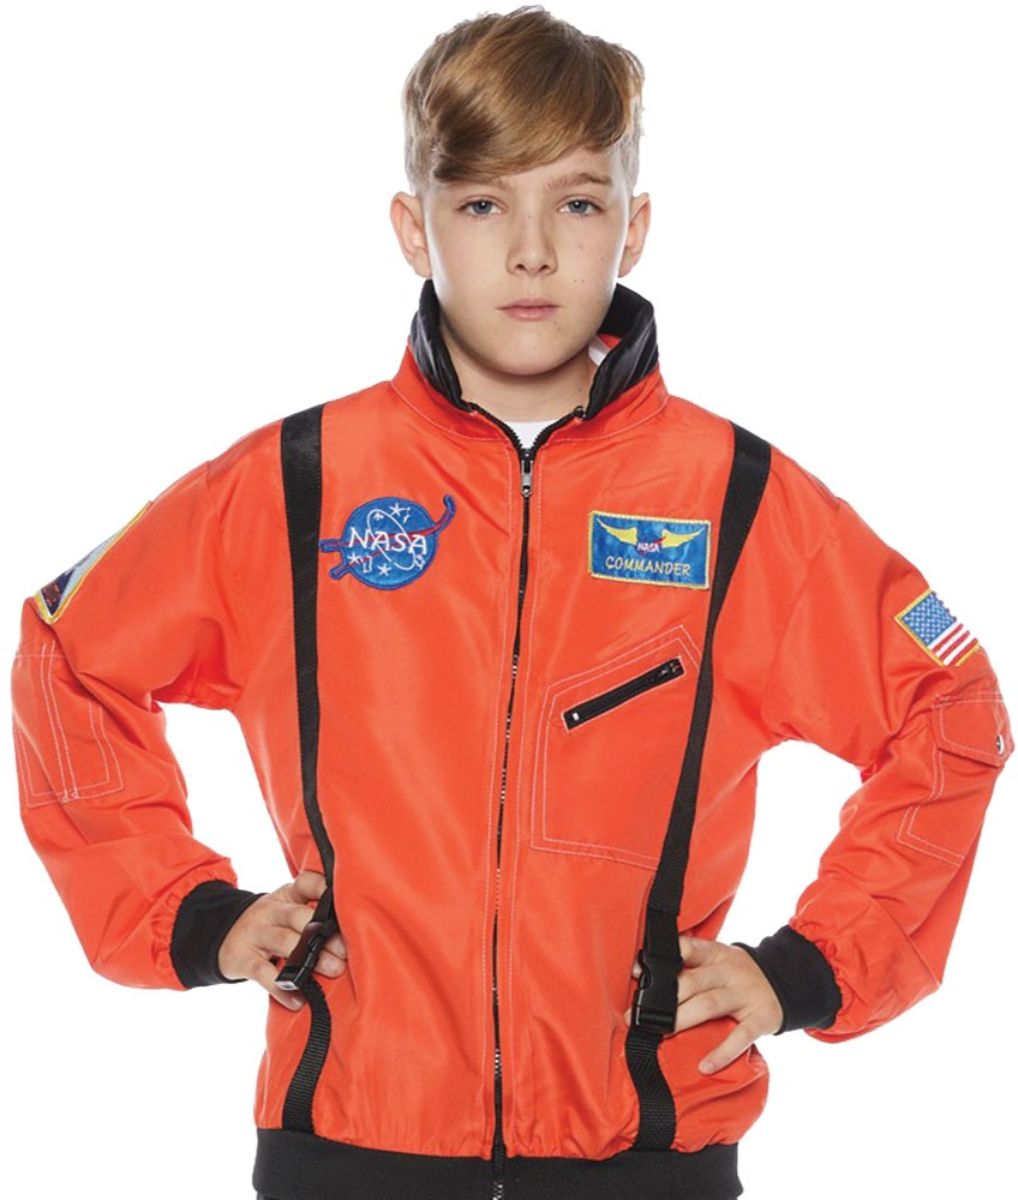 The Costume Center Orange and Black NASA Astro Unisex Children Halloween Jacket Costume Accessory- Small